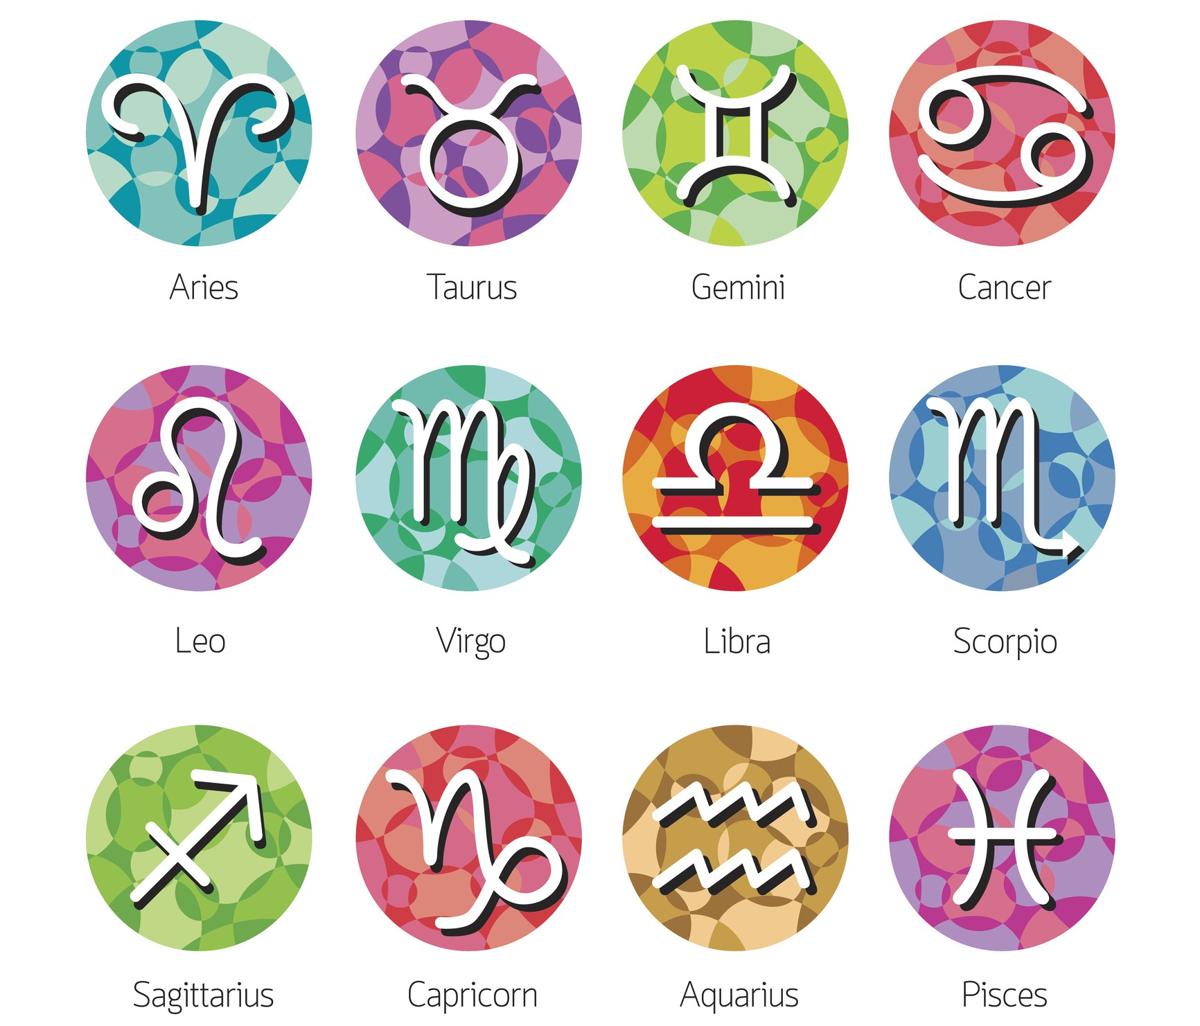 A Brief Description of the Characteristics of Different Zodiacs